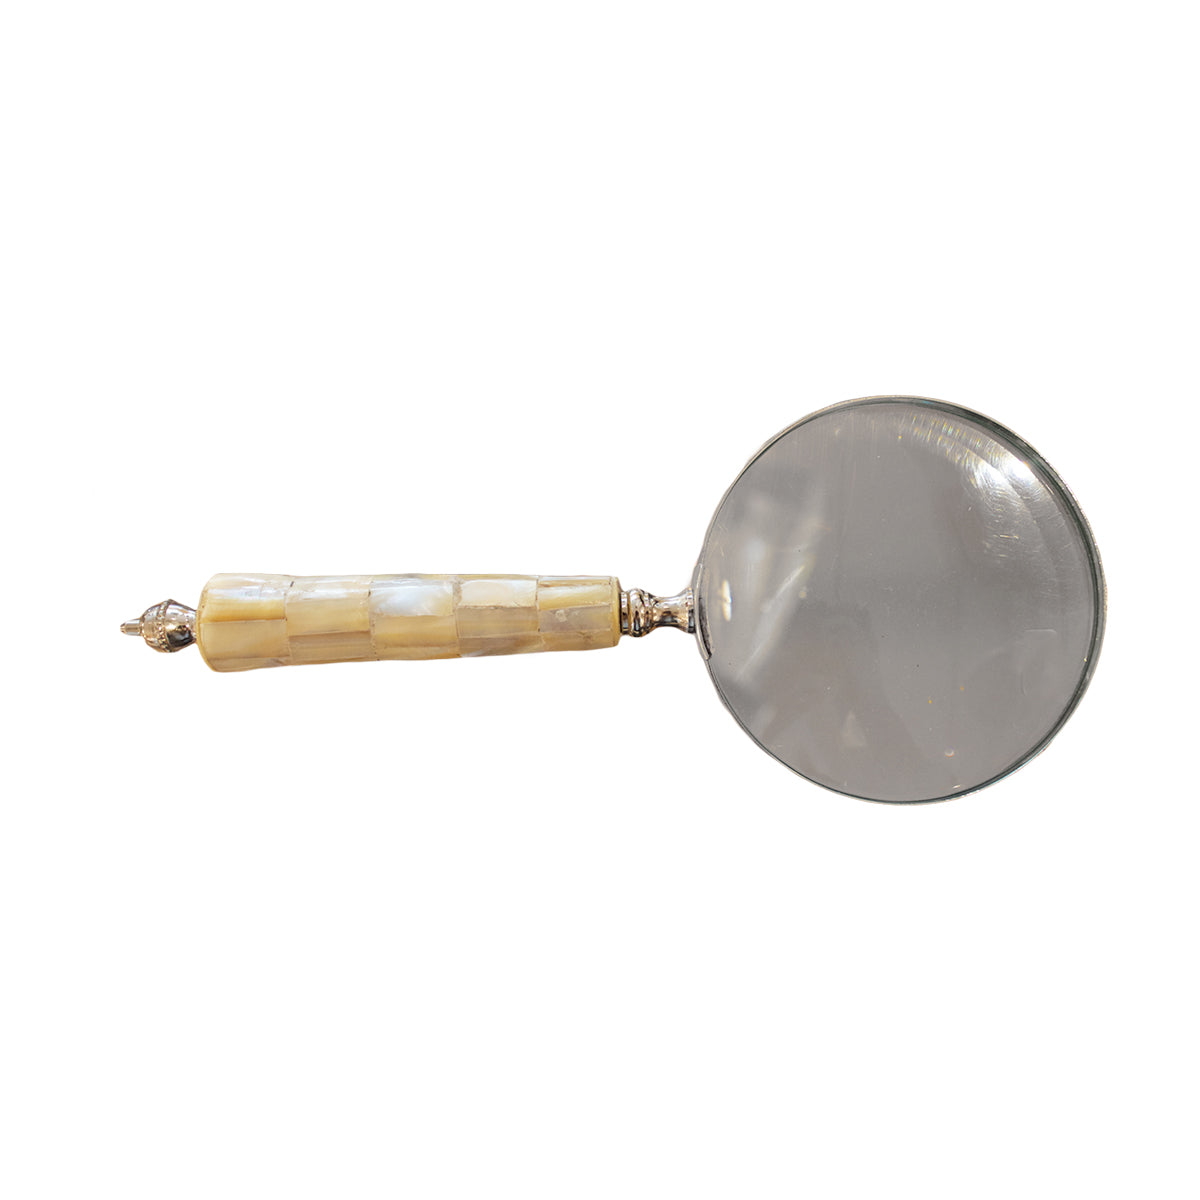 Natural horn magnifier makes an elegant desk accessory. 